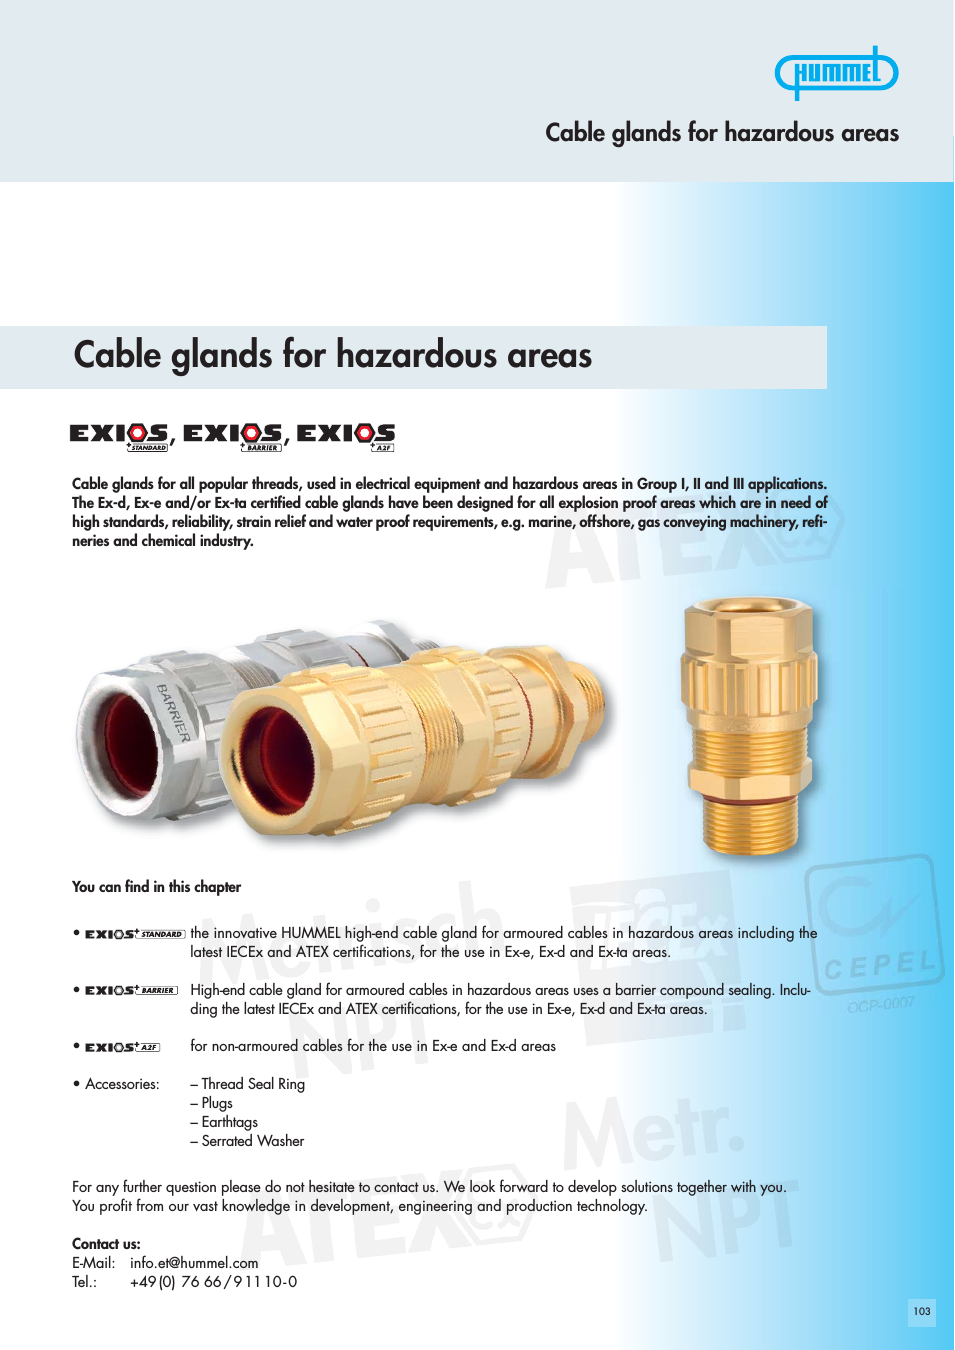 Hummel Cable Glands - Exios Standard, Exios Barrier, Exios A2F for Hazardous Areas